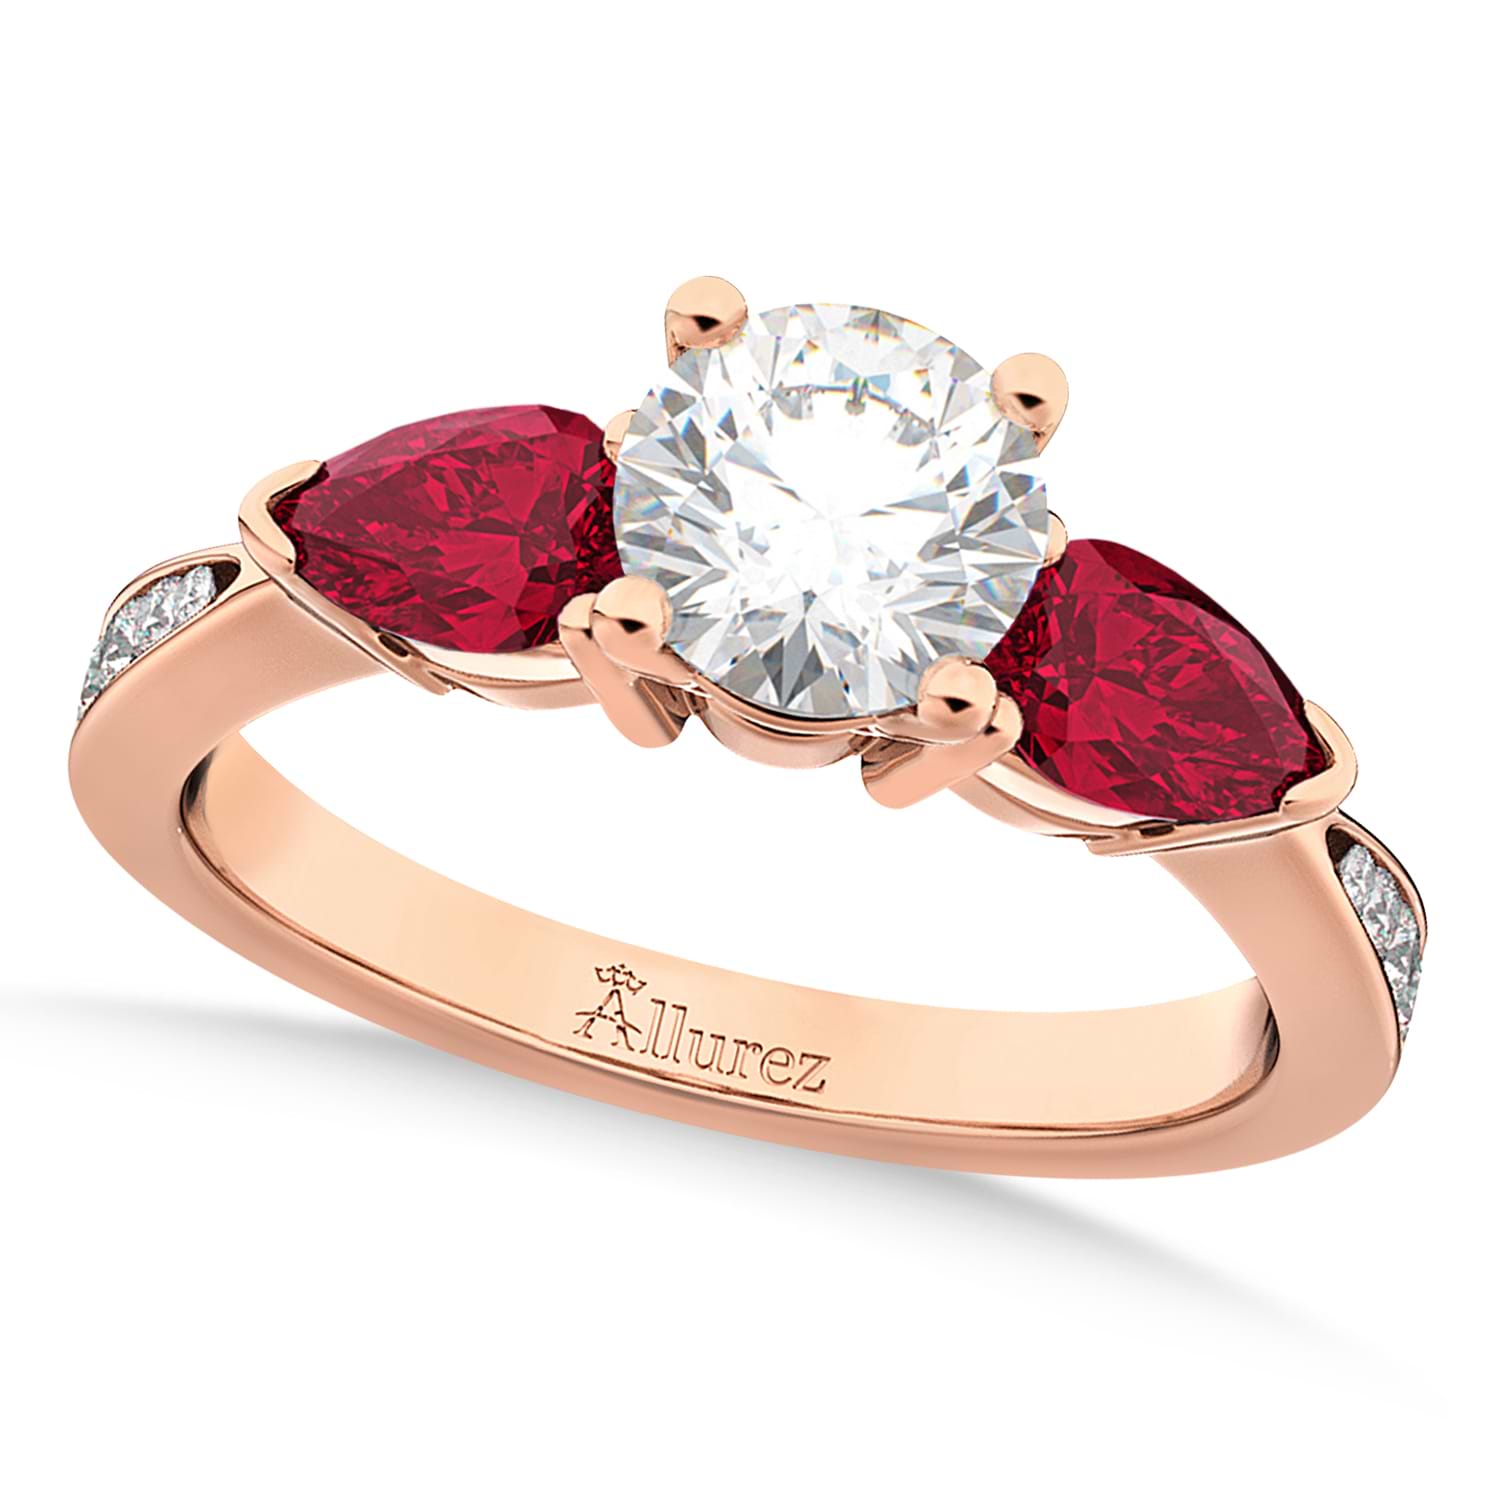 Round Diamond & Pear Ruby Gemstone Engagement Ring 18k Rose Gold (1.29ct)